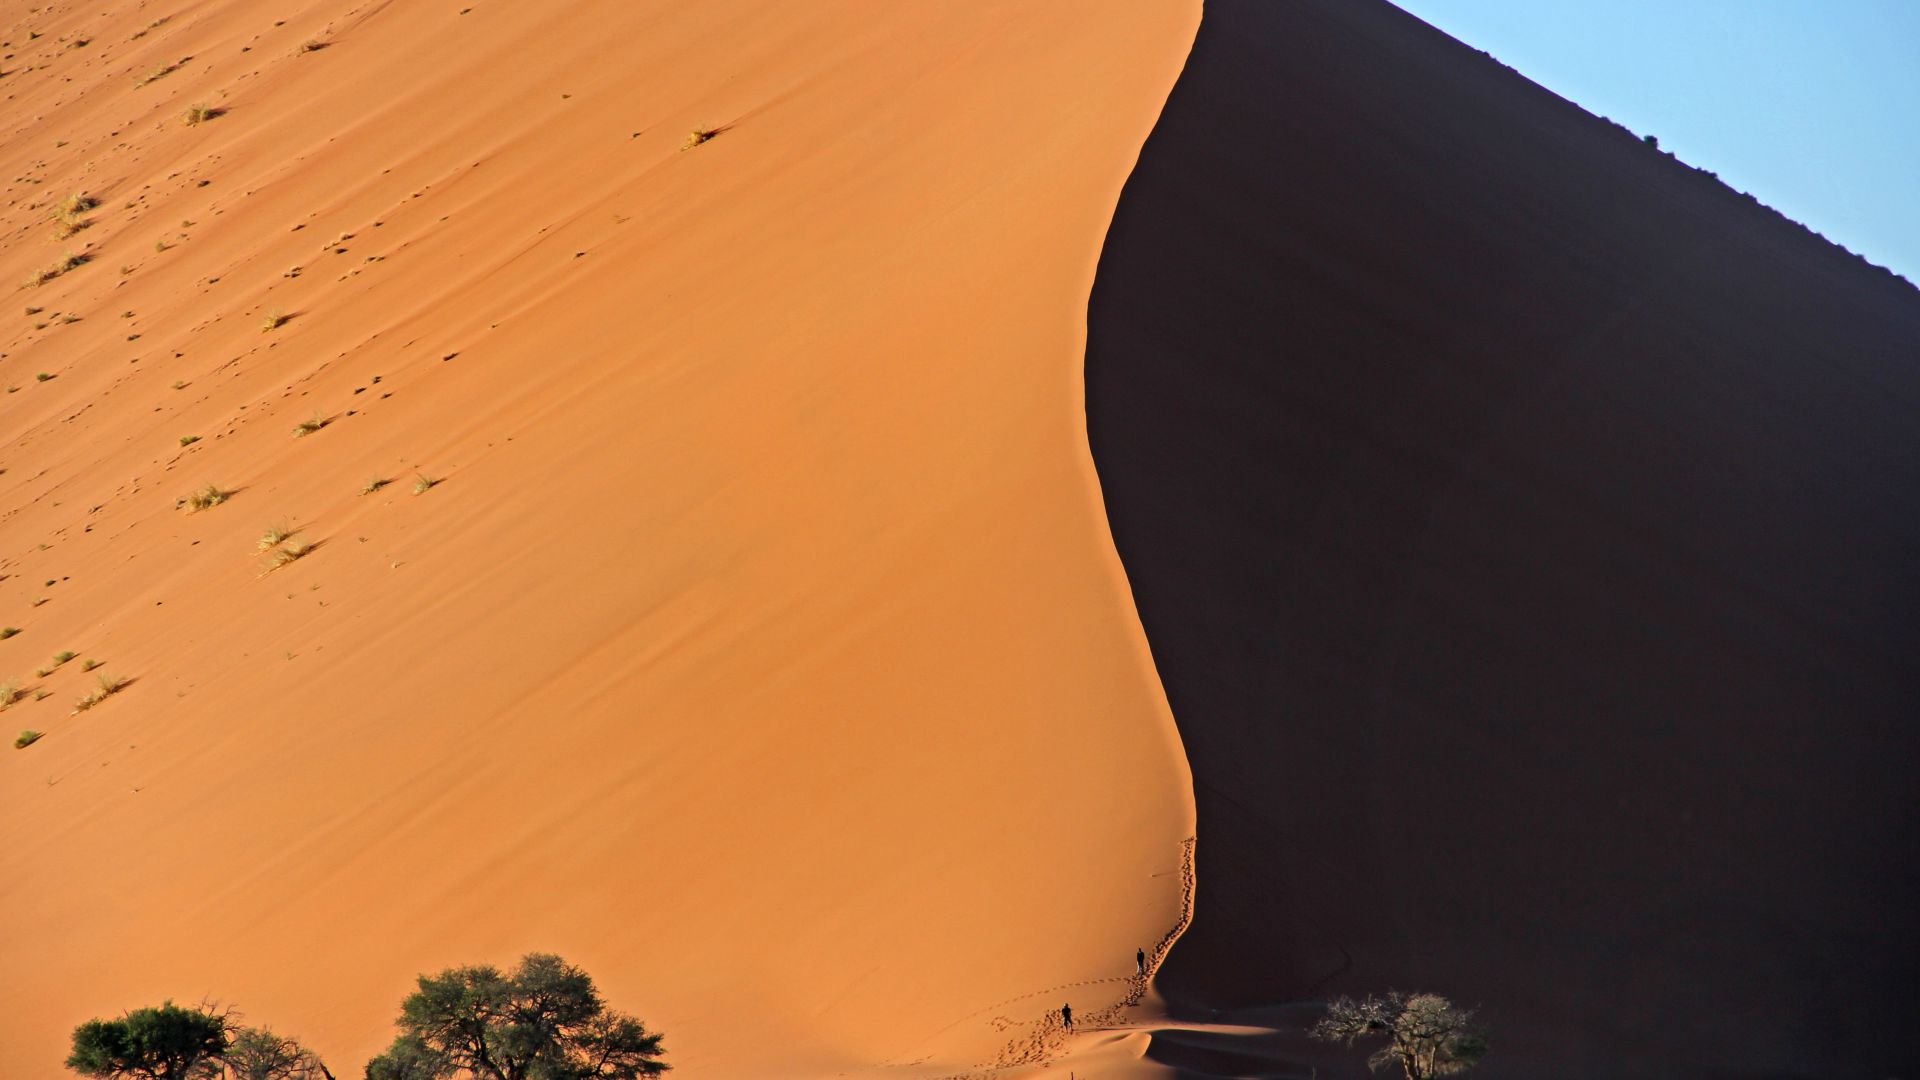 Намибия, 5k, 4k, 8k, дюны, песок, Namibia, 5k, 4k wallpaper, 8k, dunes, sand (horizontal)